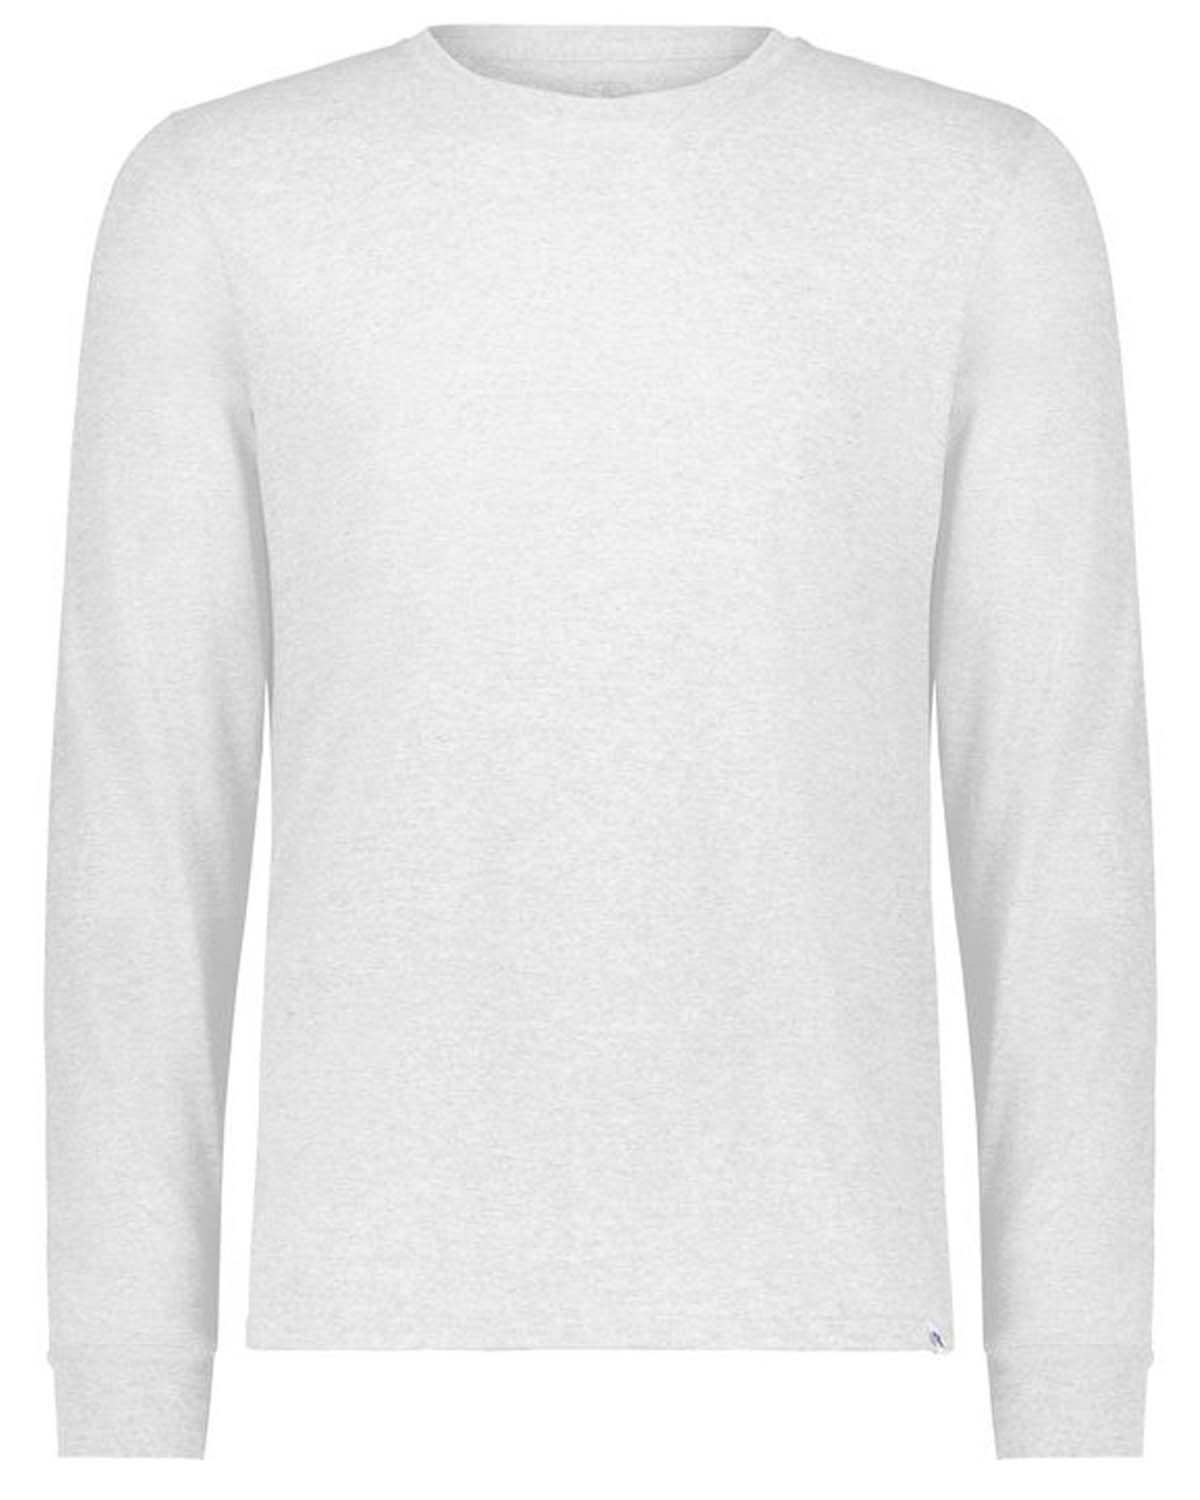 'Russell Athletic 64LTTM Essential Long Sleeve Performance T-Shirt'